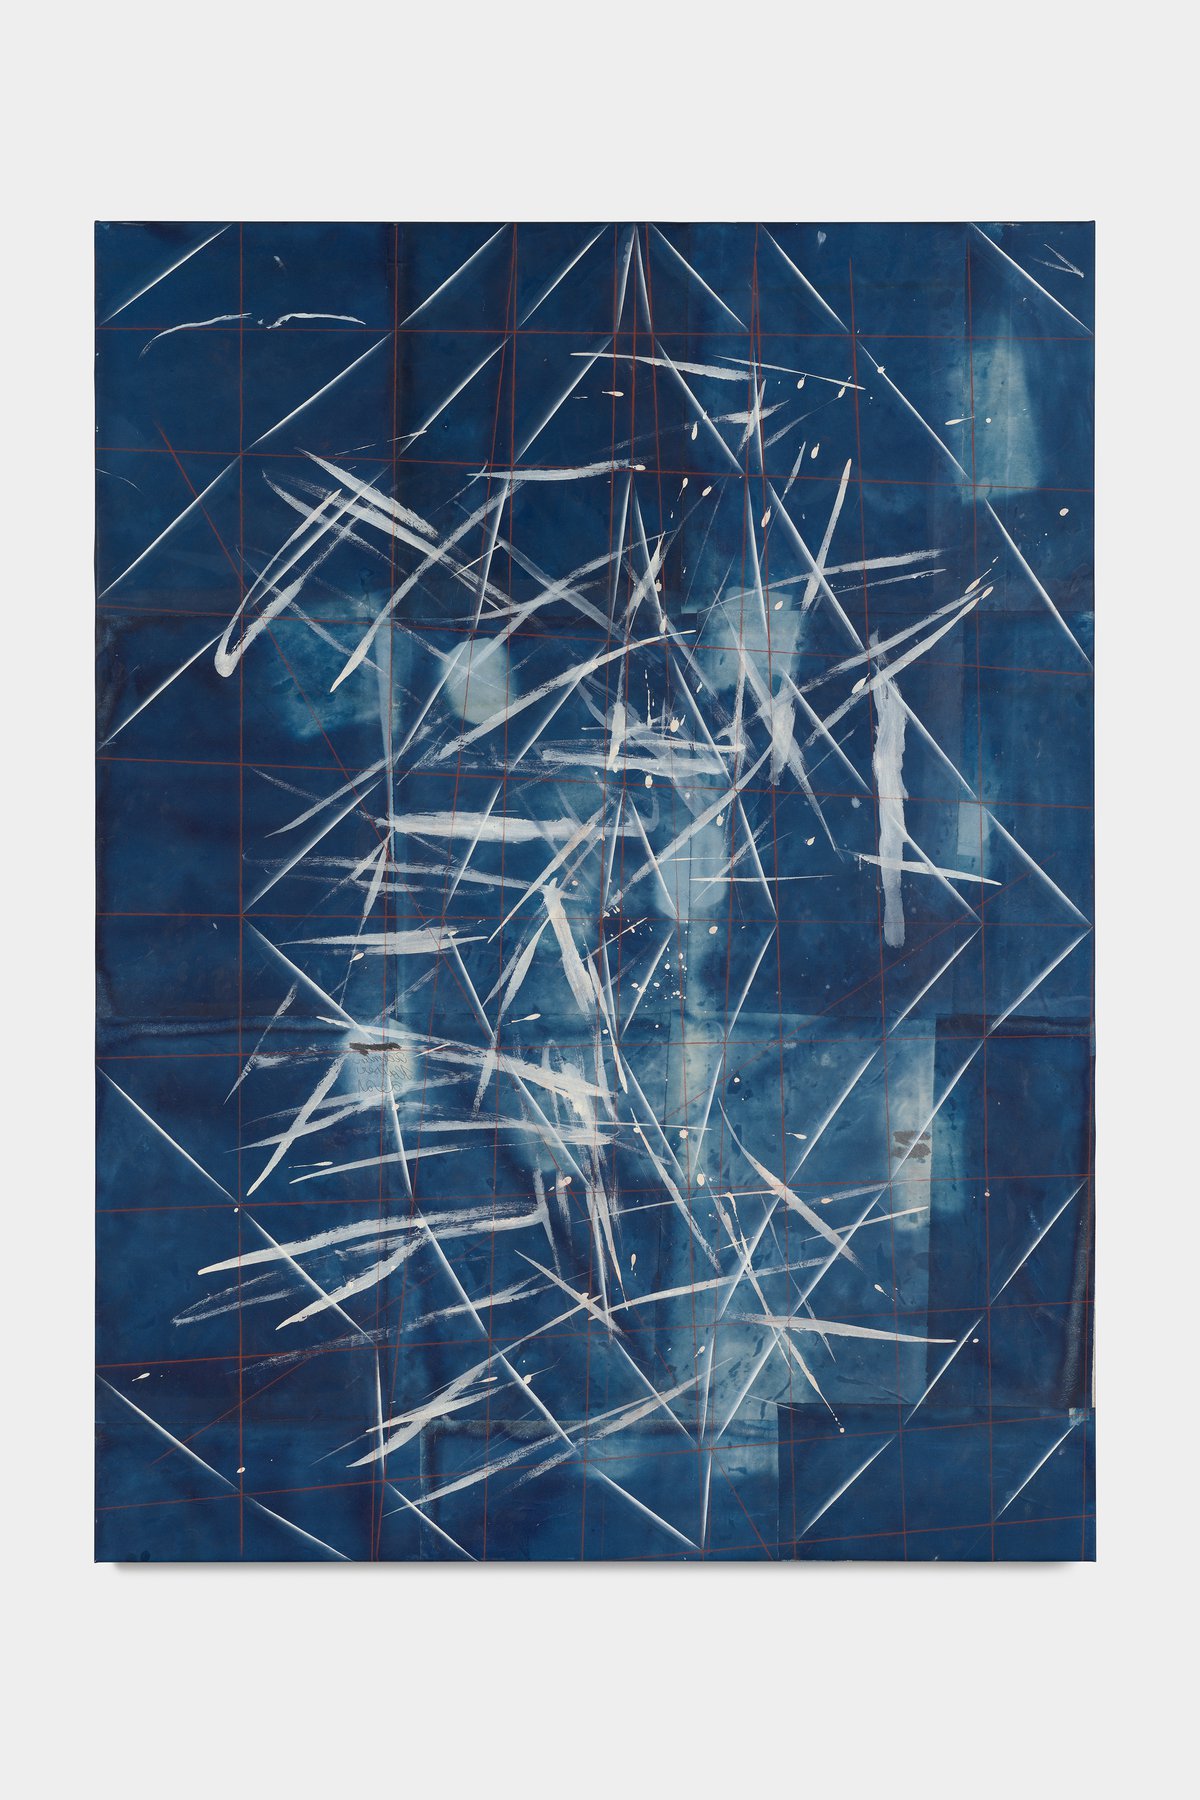 Tillman KaiserRegenwasser, 2021Oil/egg tempera on cyanotype on paper &amp; canvas200 x 150 cm